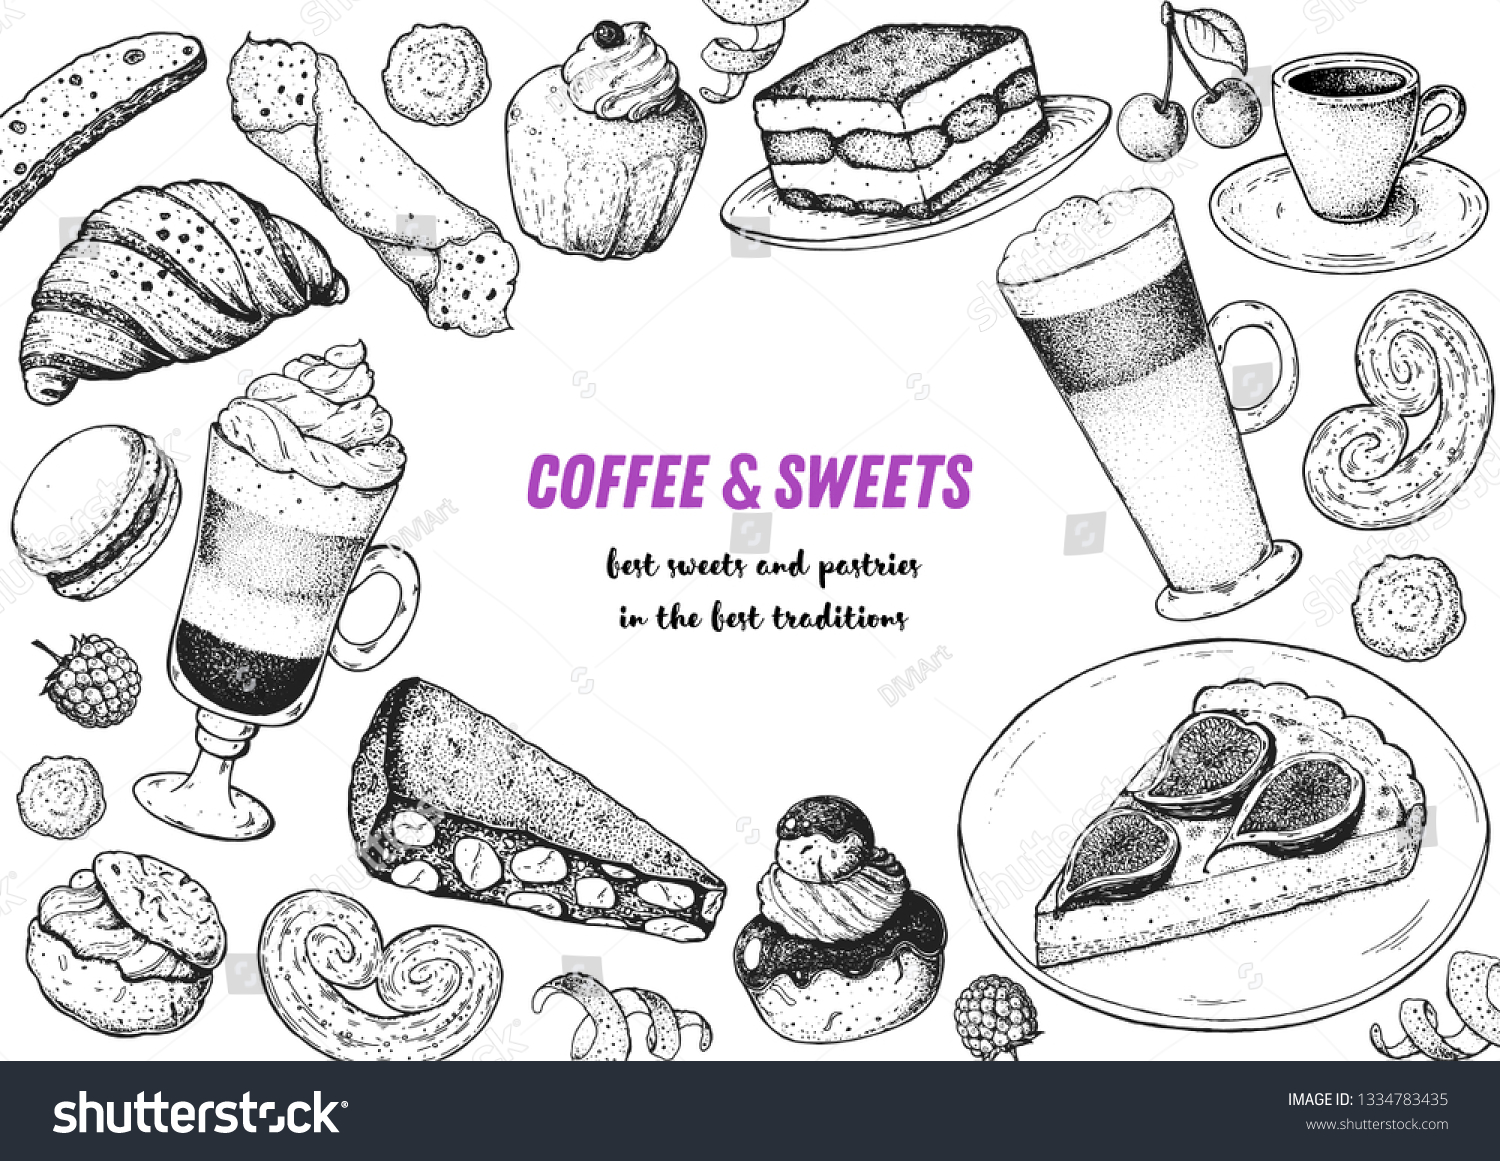 Coffee shop menu design. Hand drawn sketch illustration. Coffee and desserts. Cafe menu elements. Desserts for breakfast.